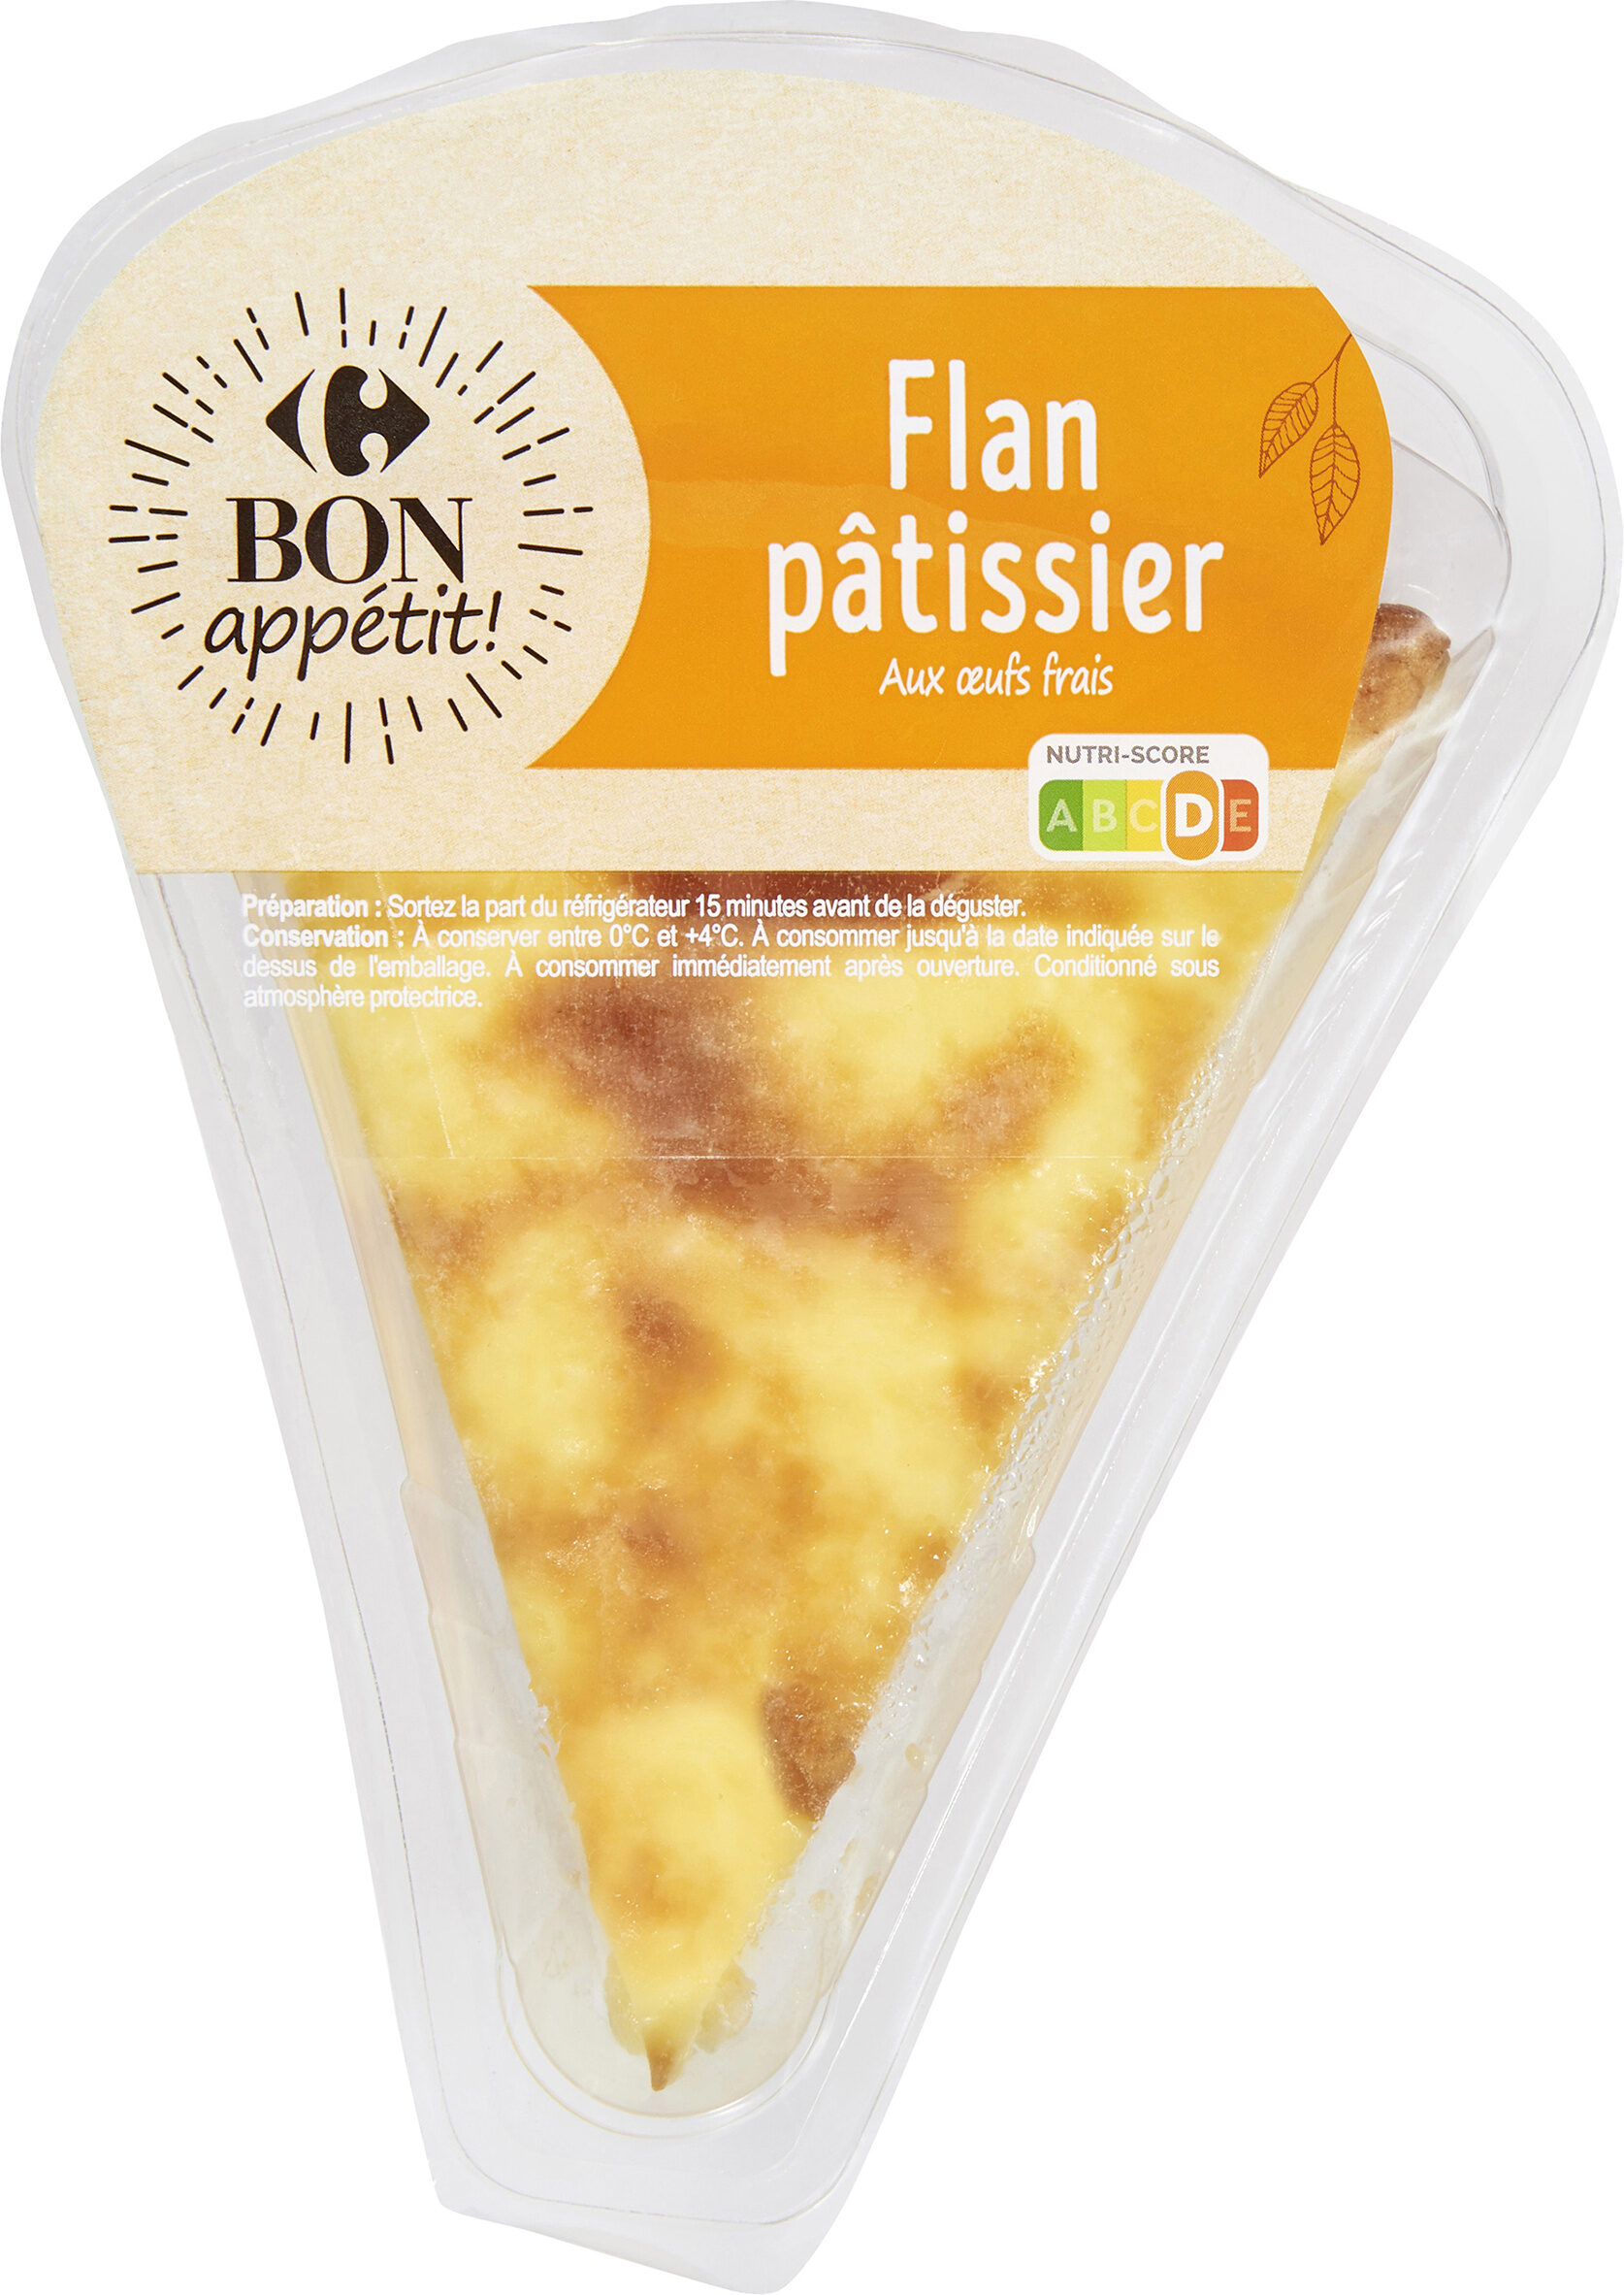 DESSERT Flan pâtissier - Product - fr